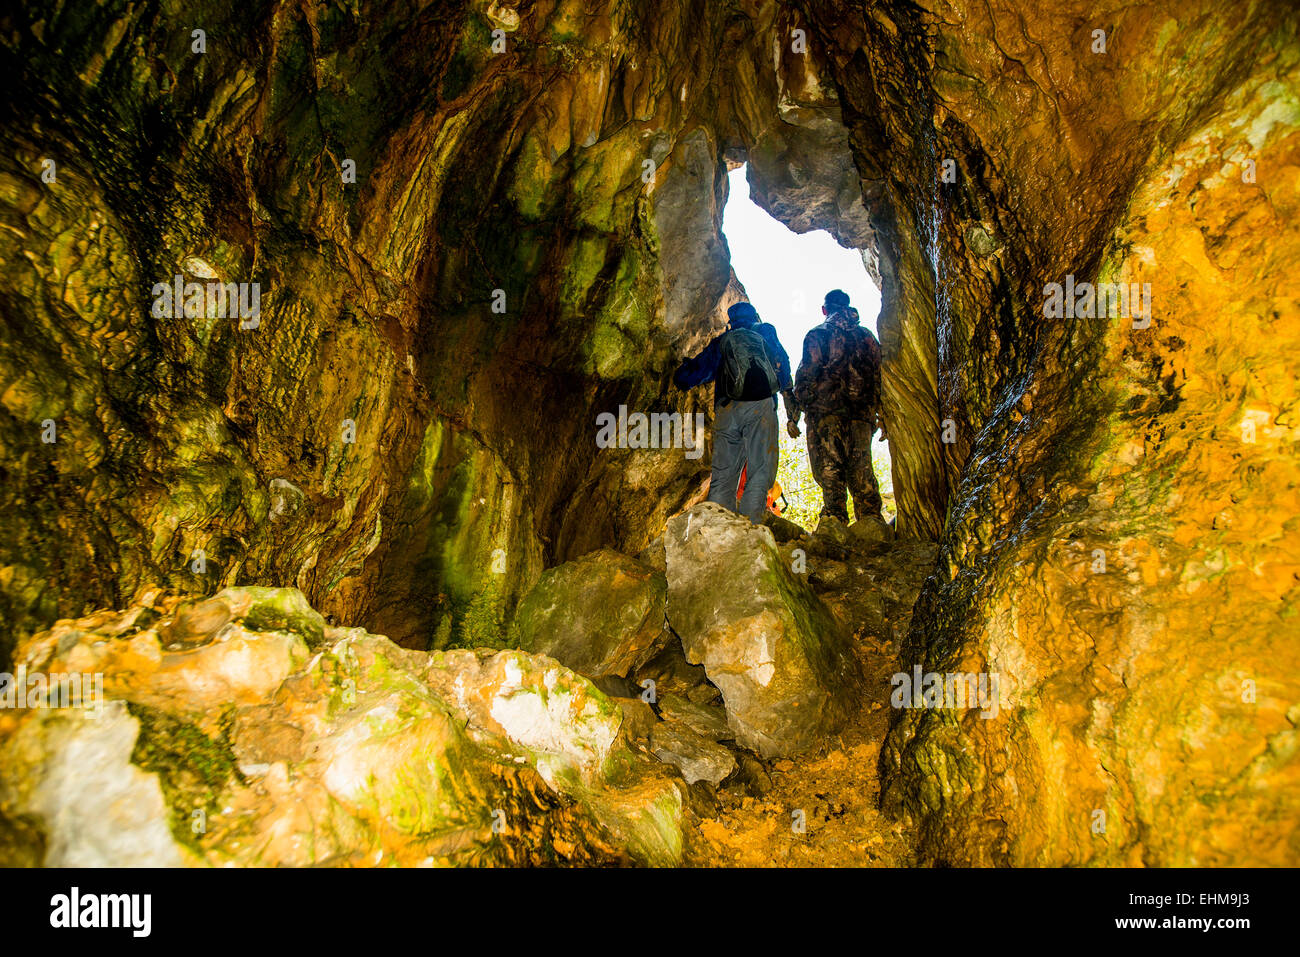 Caucasian men exploring rock formation cave Stock Photo